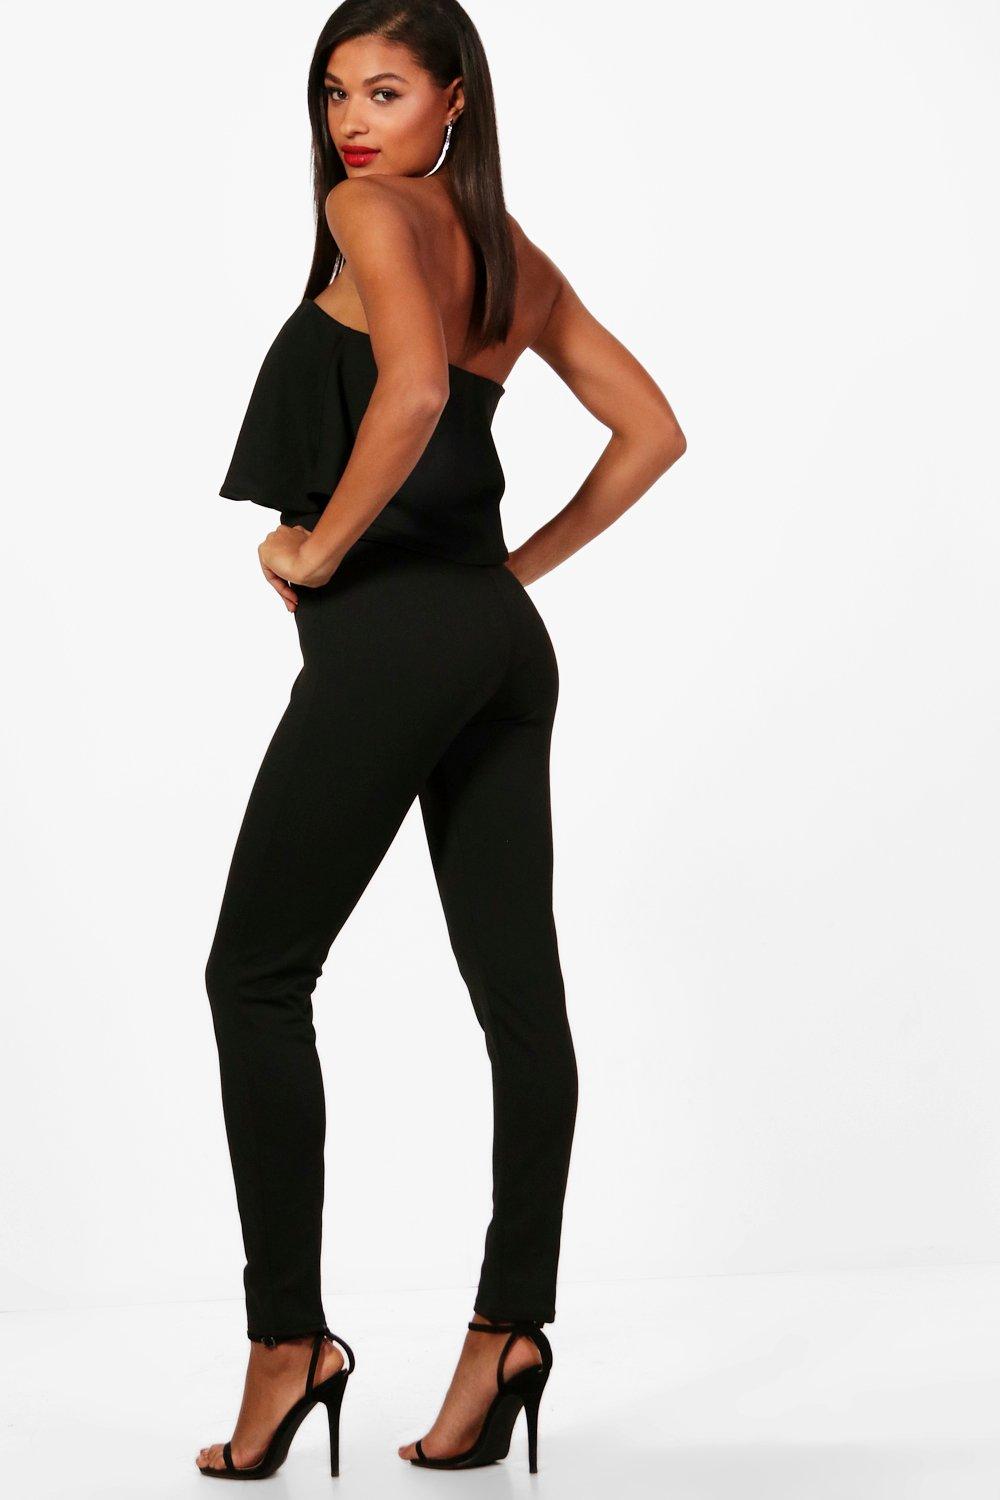 Boohoo Womens Ellie Frill Bandeau Slim Leg Jumpsuit | eBay